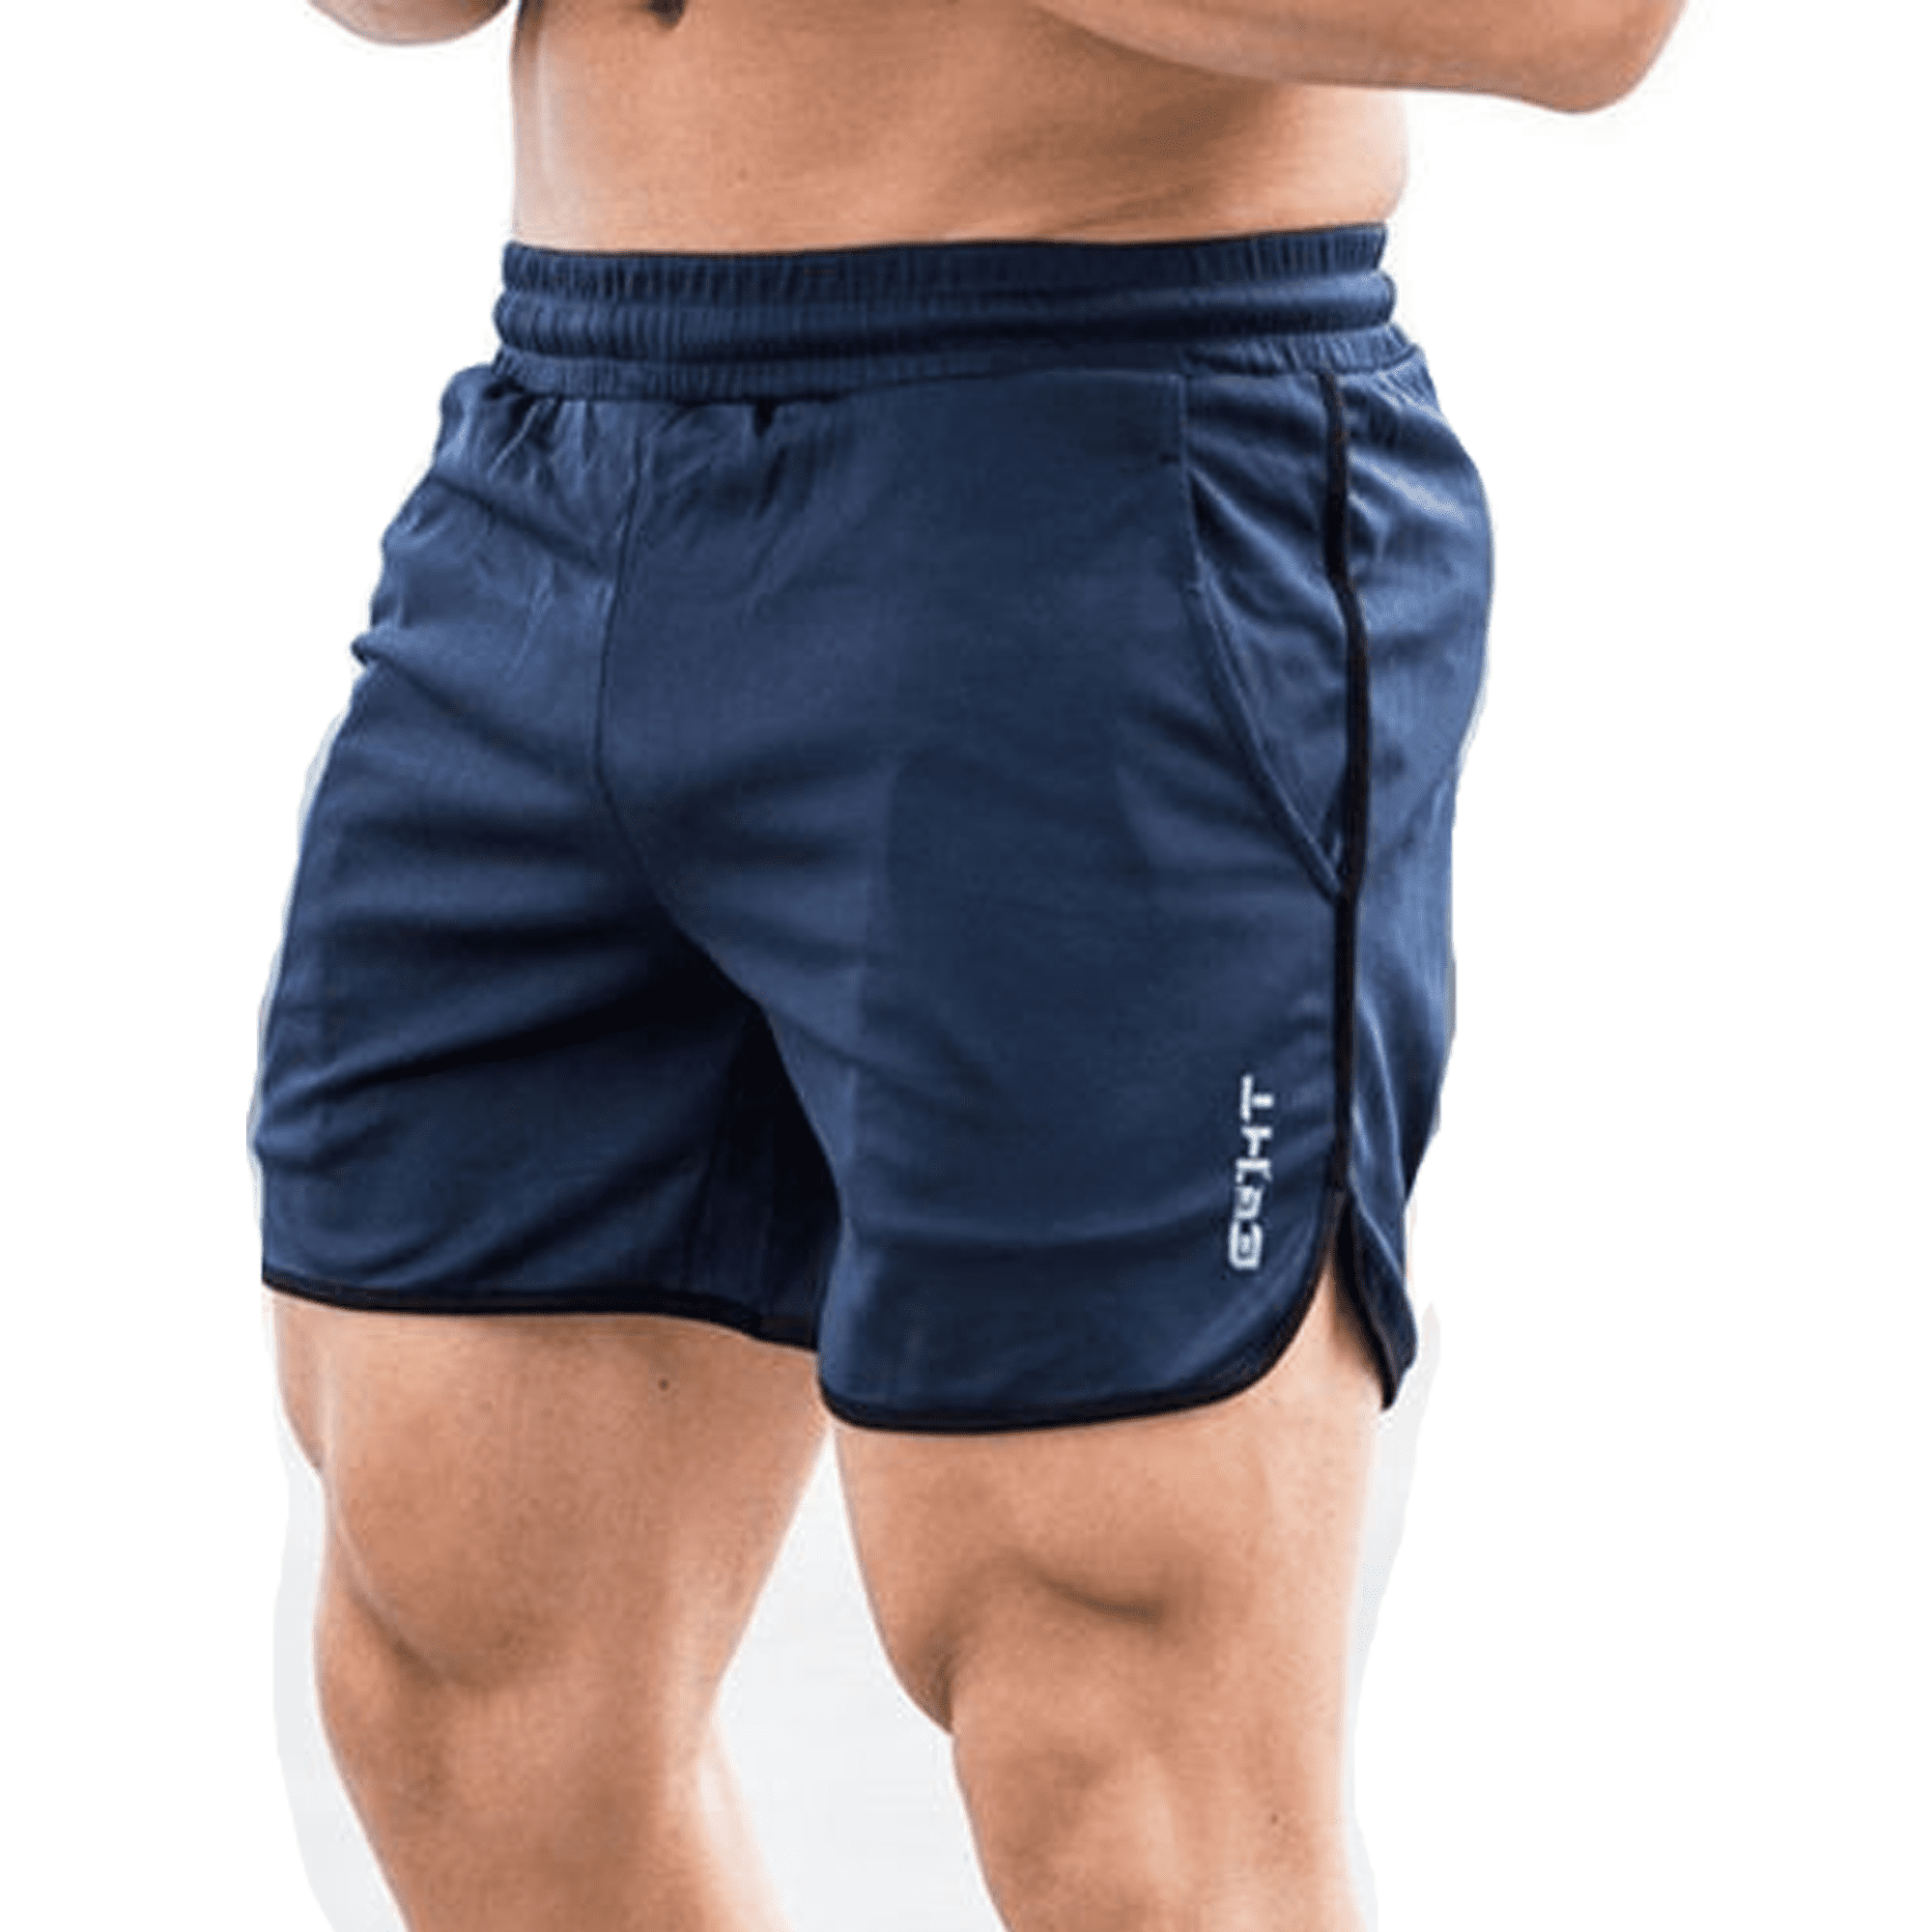 Men's Sports Training Bodybuilding Summer GYM Shorts Workout Fitness Short Pants 